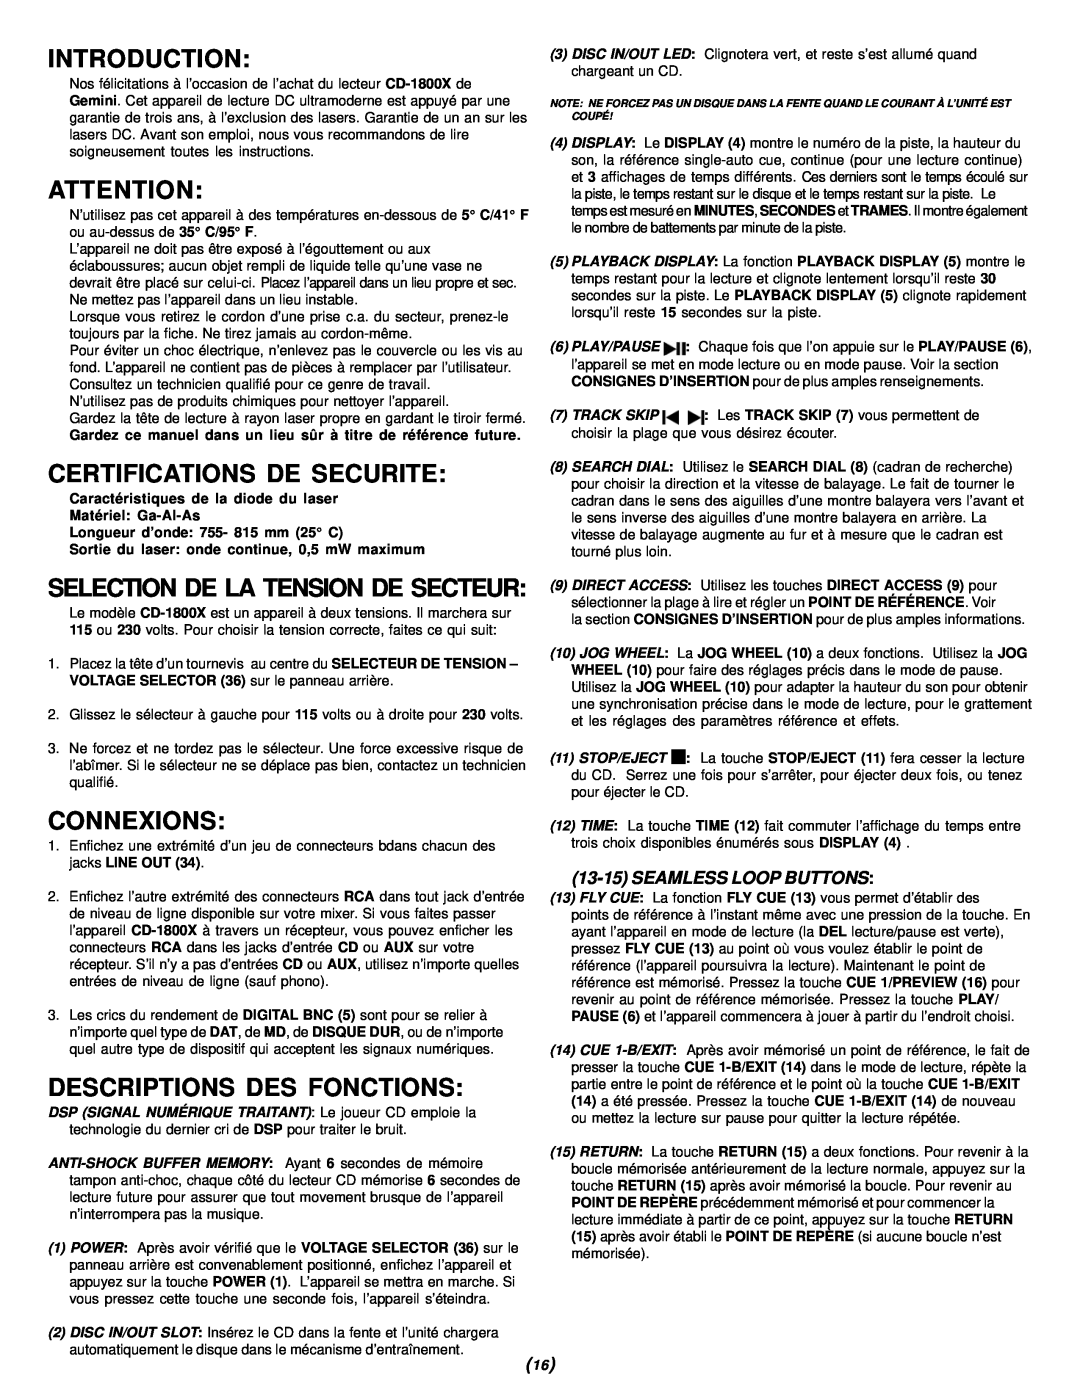 Gemini CD-1800X manual Certifications De Securite, Connexions, Descriptions Des Fonctions, Introduction, Matériel Ga-Al-As 